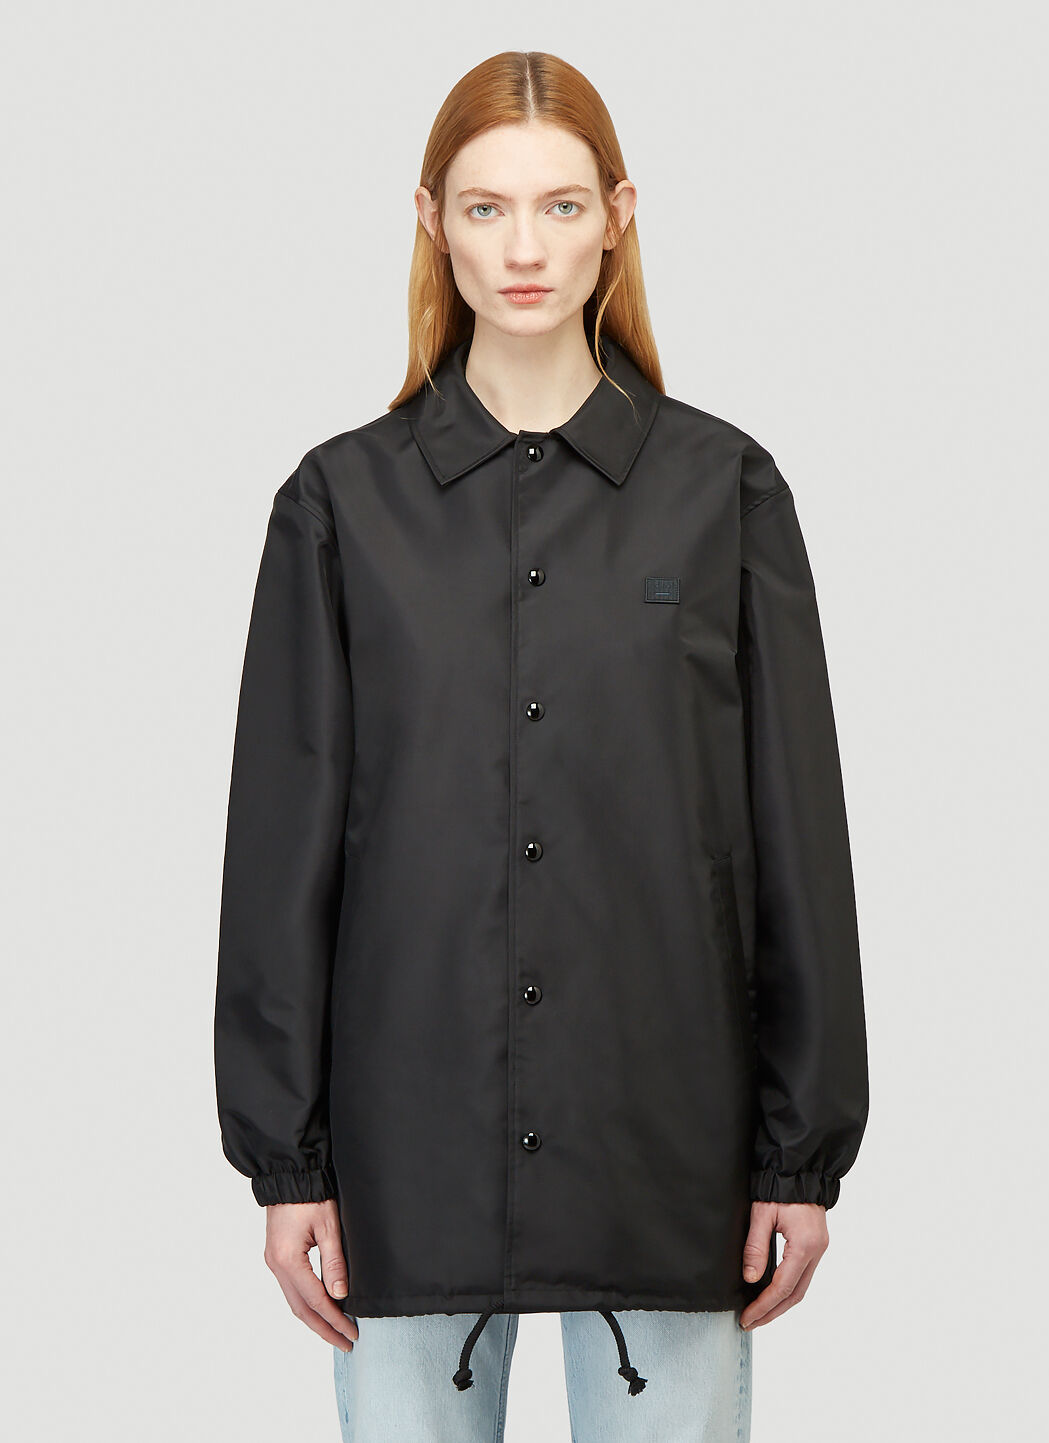 Saint Laurent Face Print Jacket Black sla0235026